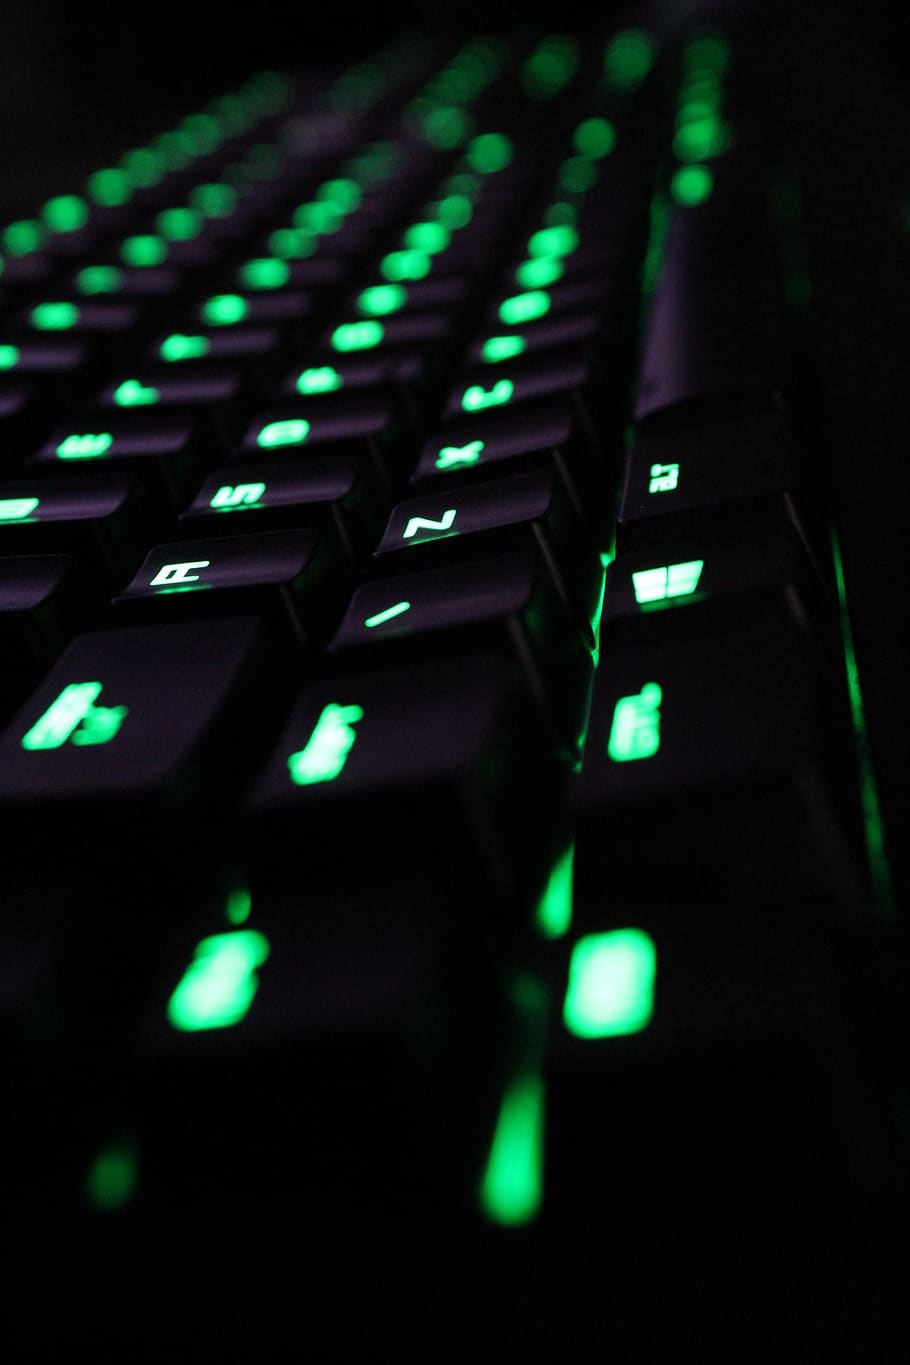 teclado, computadora, razer, verde, oscuro, tecnología, equipo informático, ninguna persona, adentro, comunicación